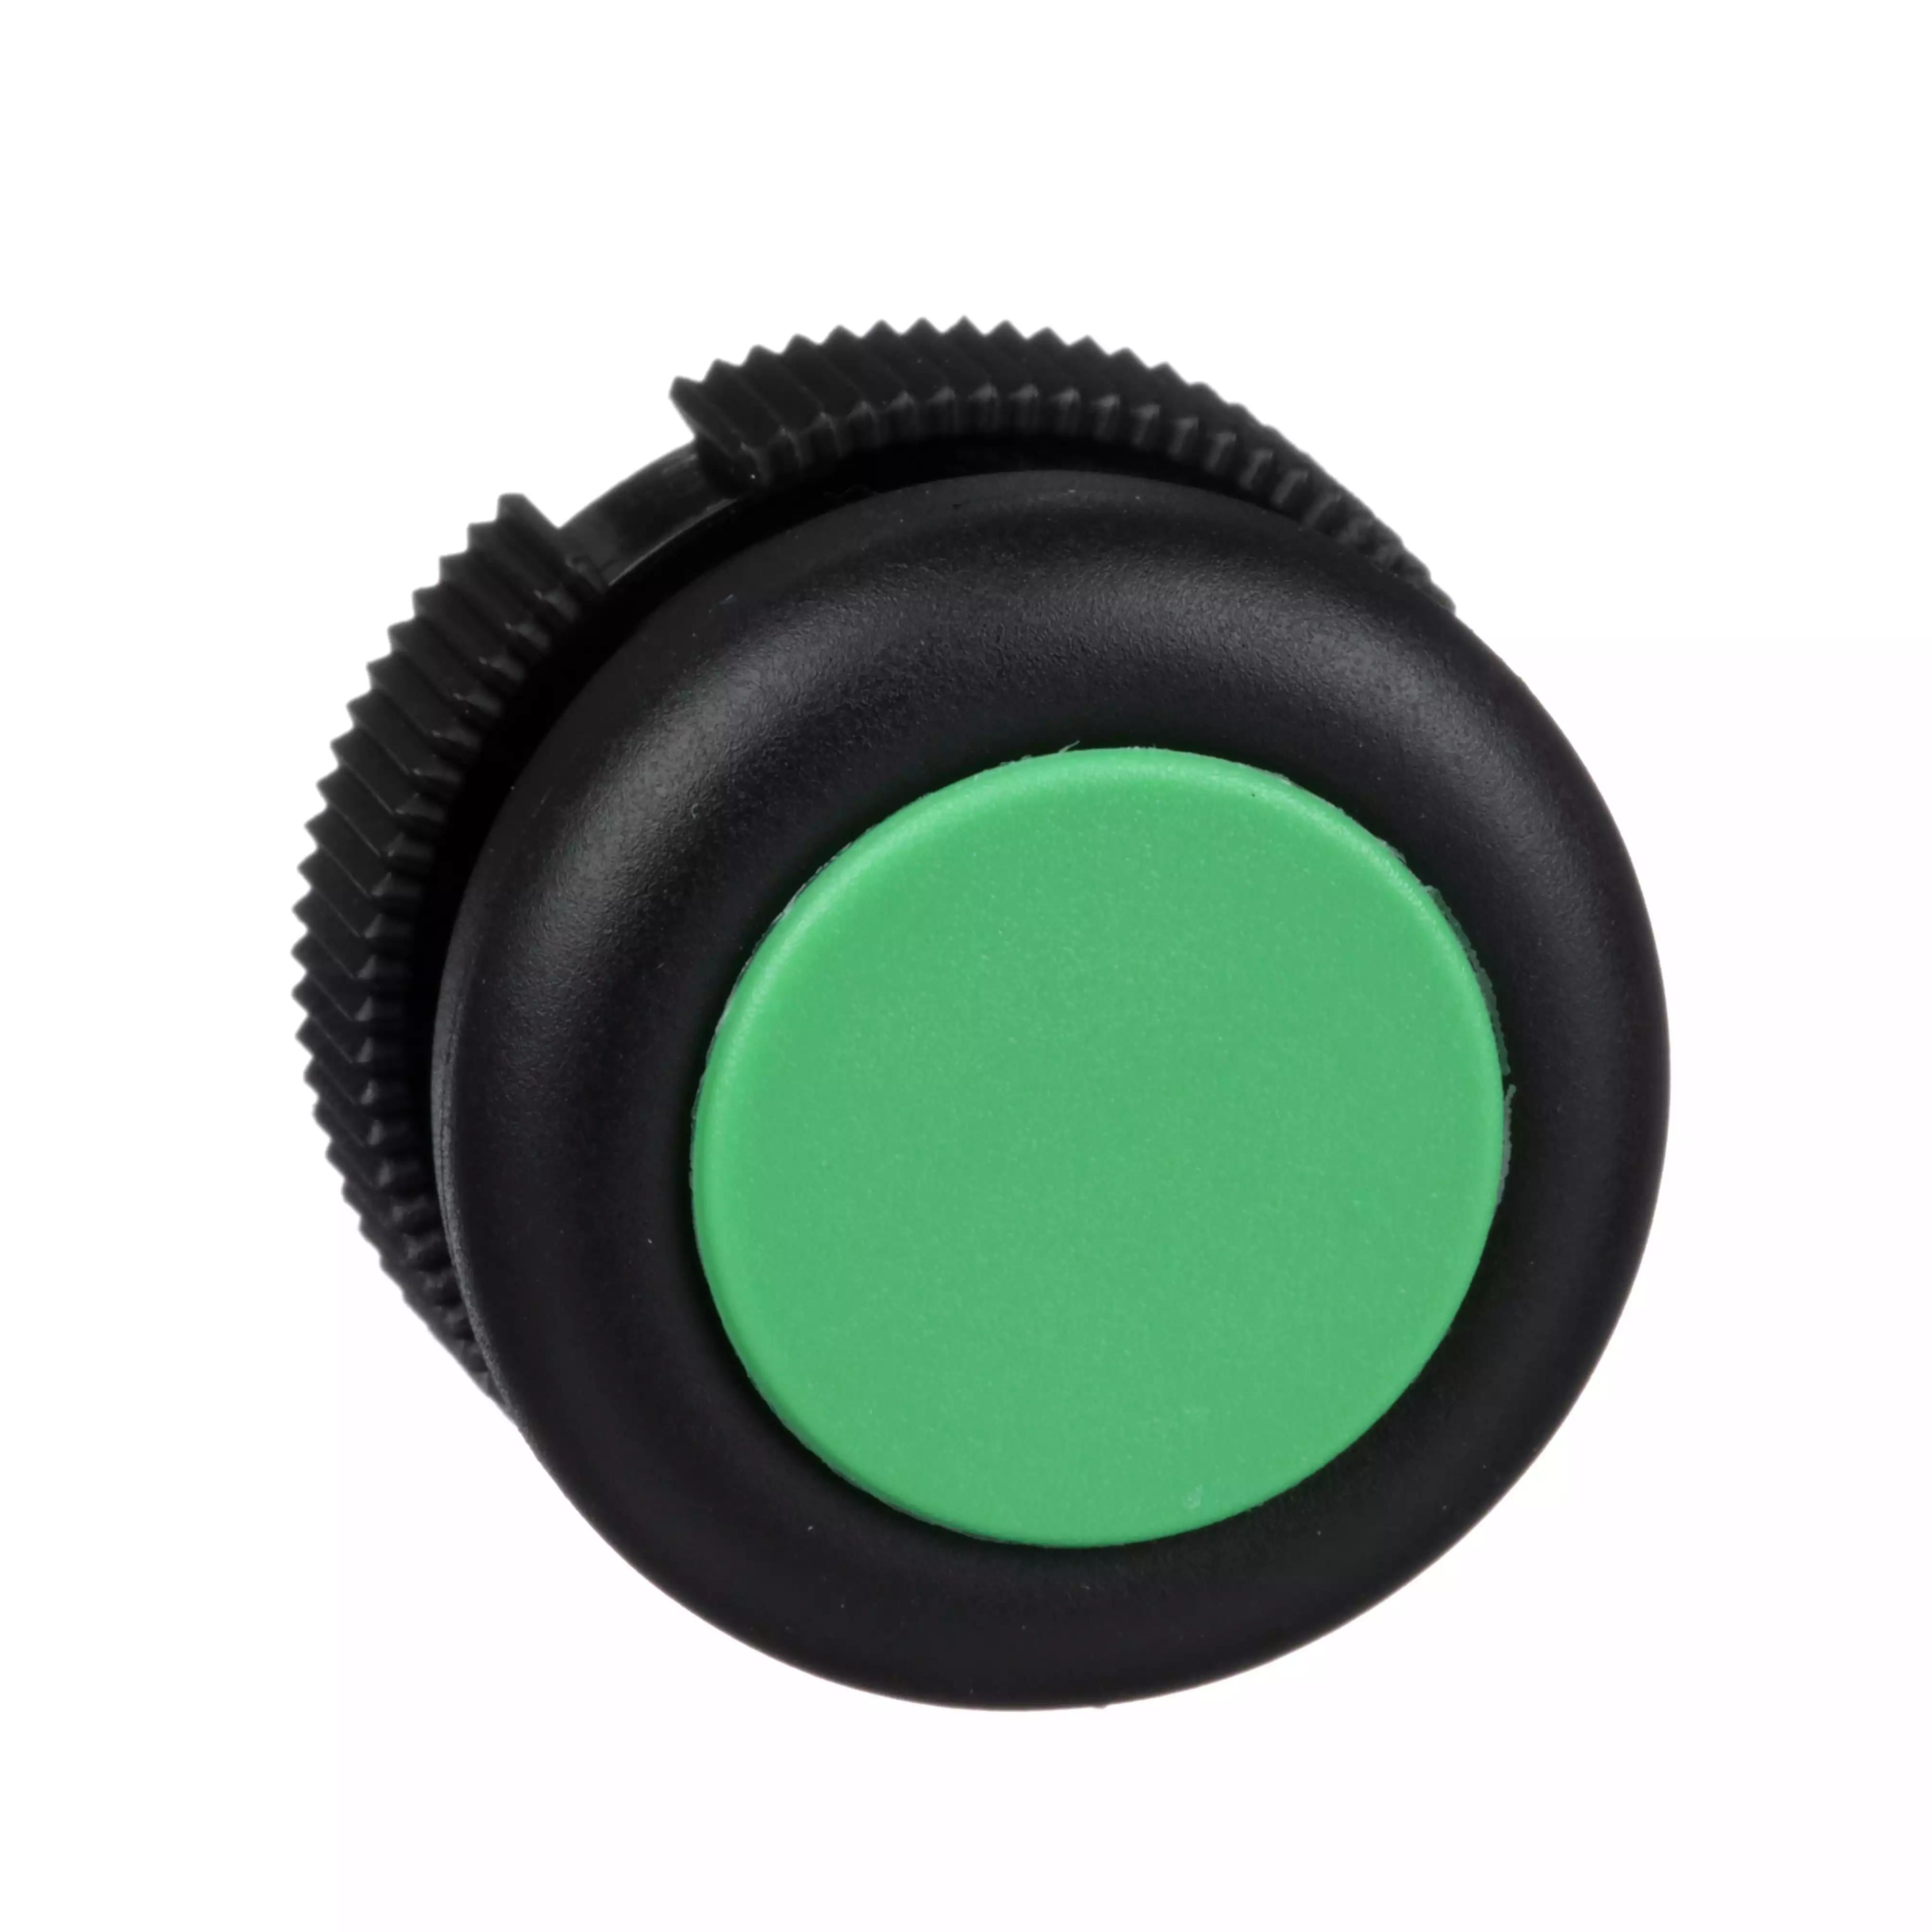 Push button head, Harmony XAC, plastic, green, booted, spring return